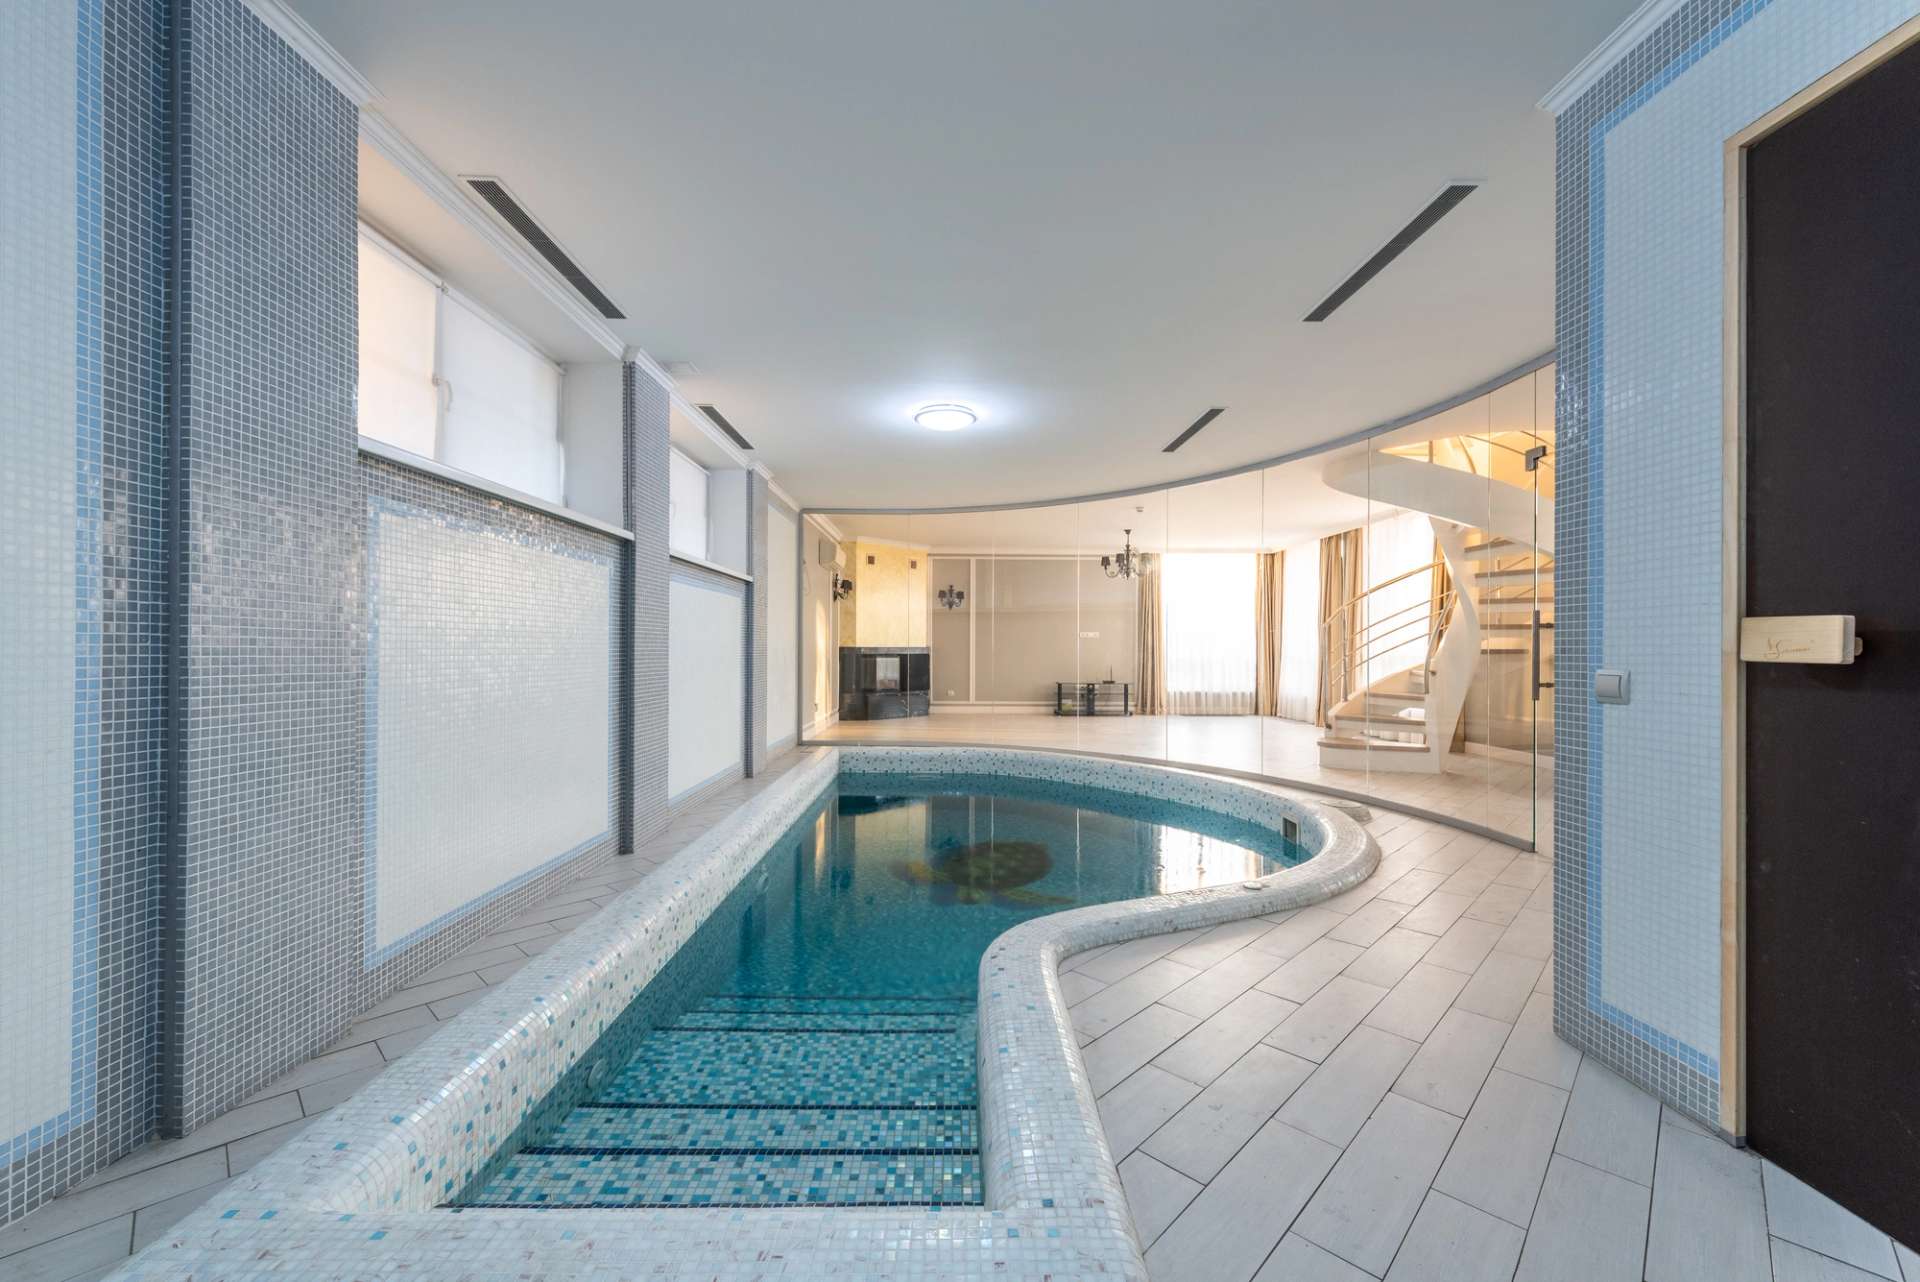 italian villa rentals: detail of a swimming pool